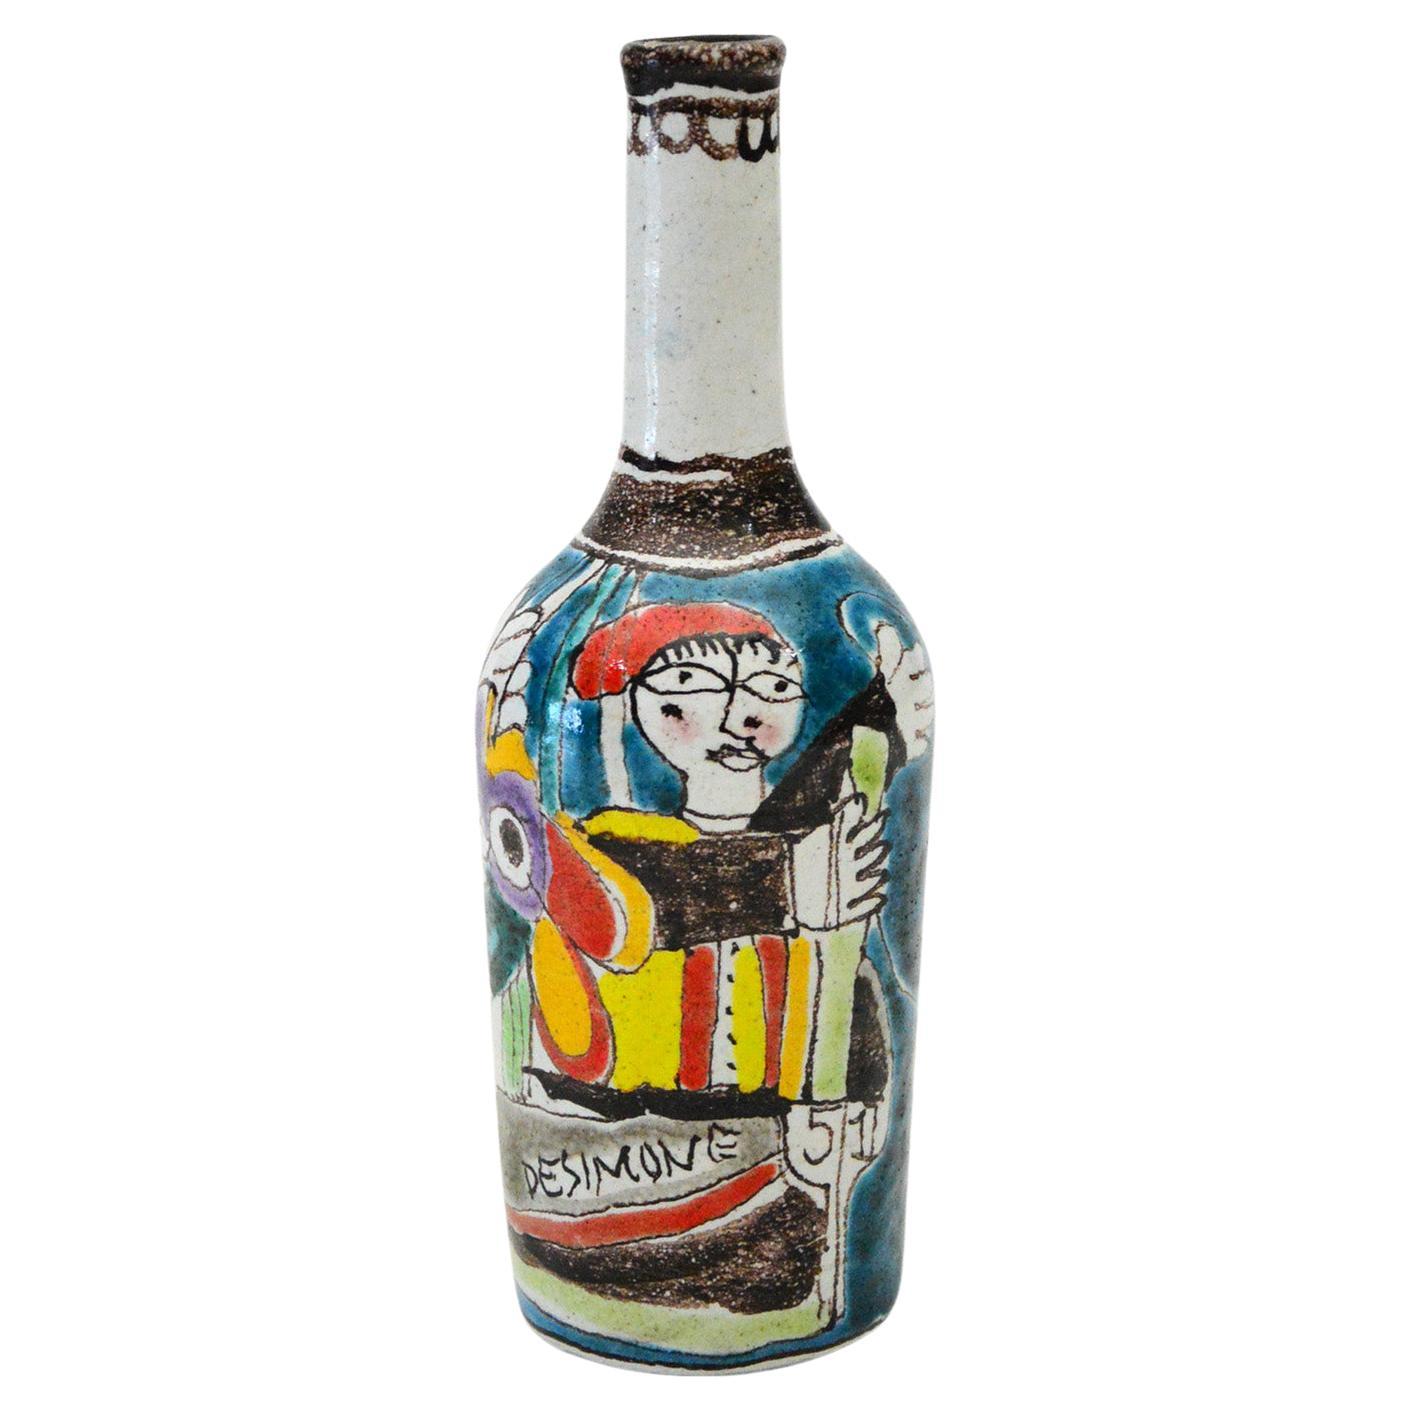 Vintage Italian Ceramic Bottle by Giovanni de Simone, 1951